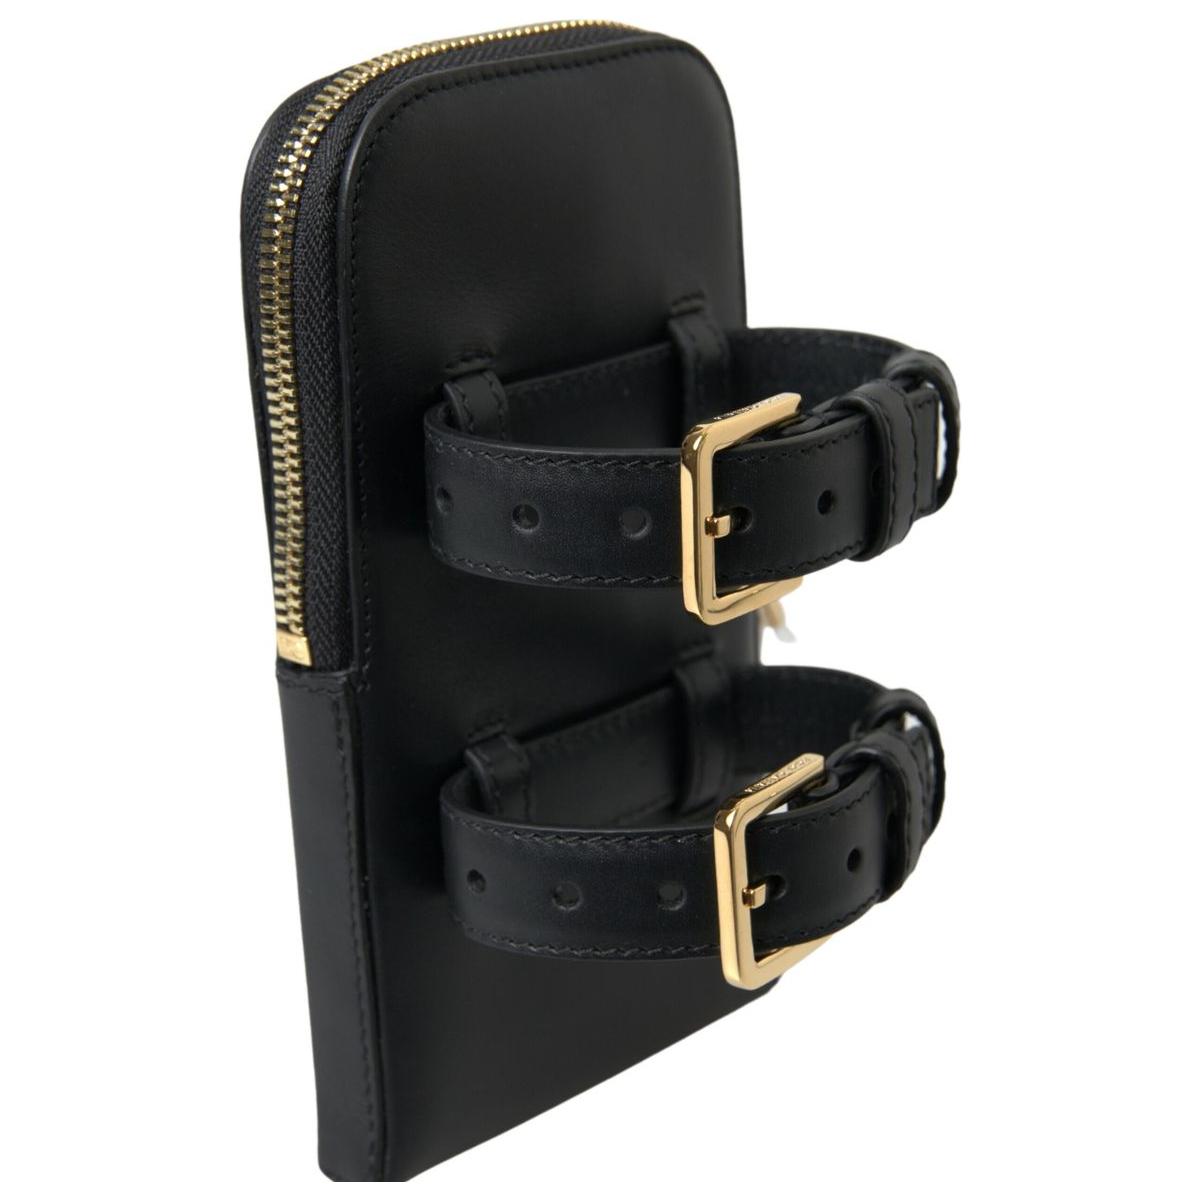 Dolce & Gabbana Elegant Leather Wristlet Clutch black-leather-men-purse-double-belt-strap-bracelet-bag 465A4756-scaled-89932fbb-864.jpg